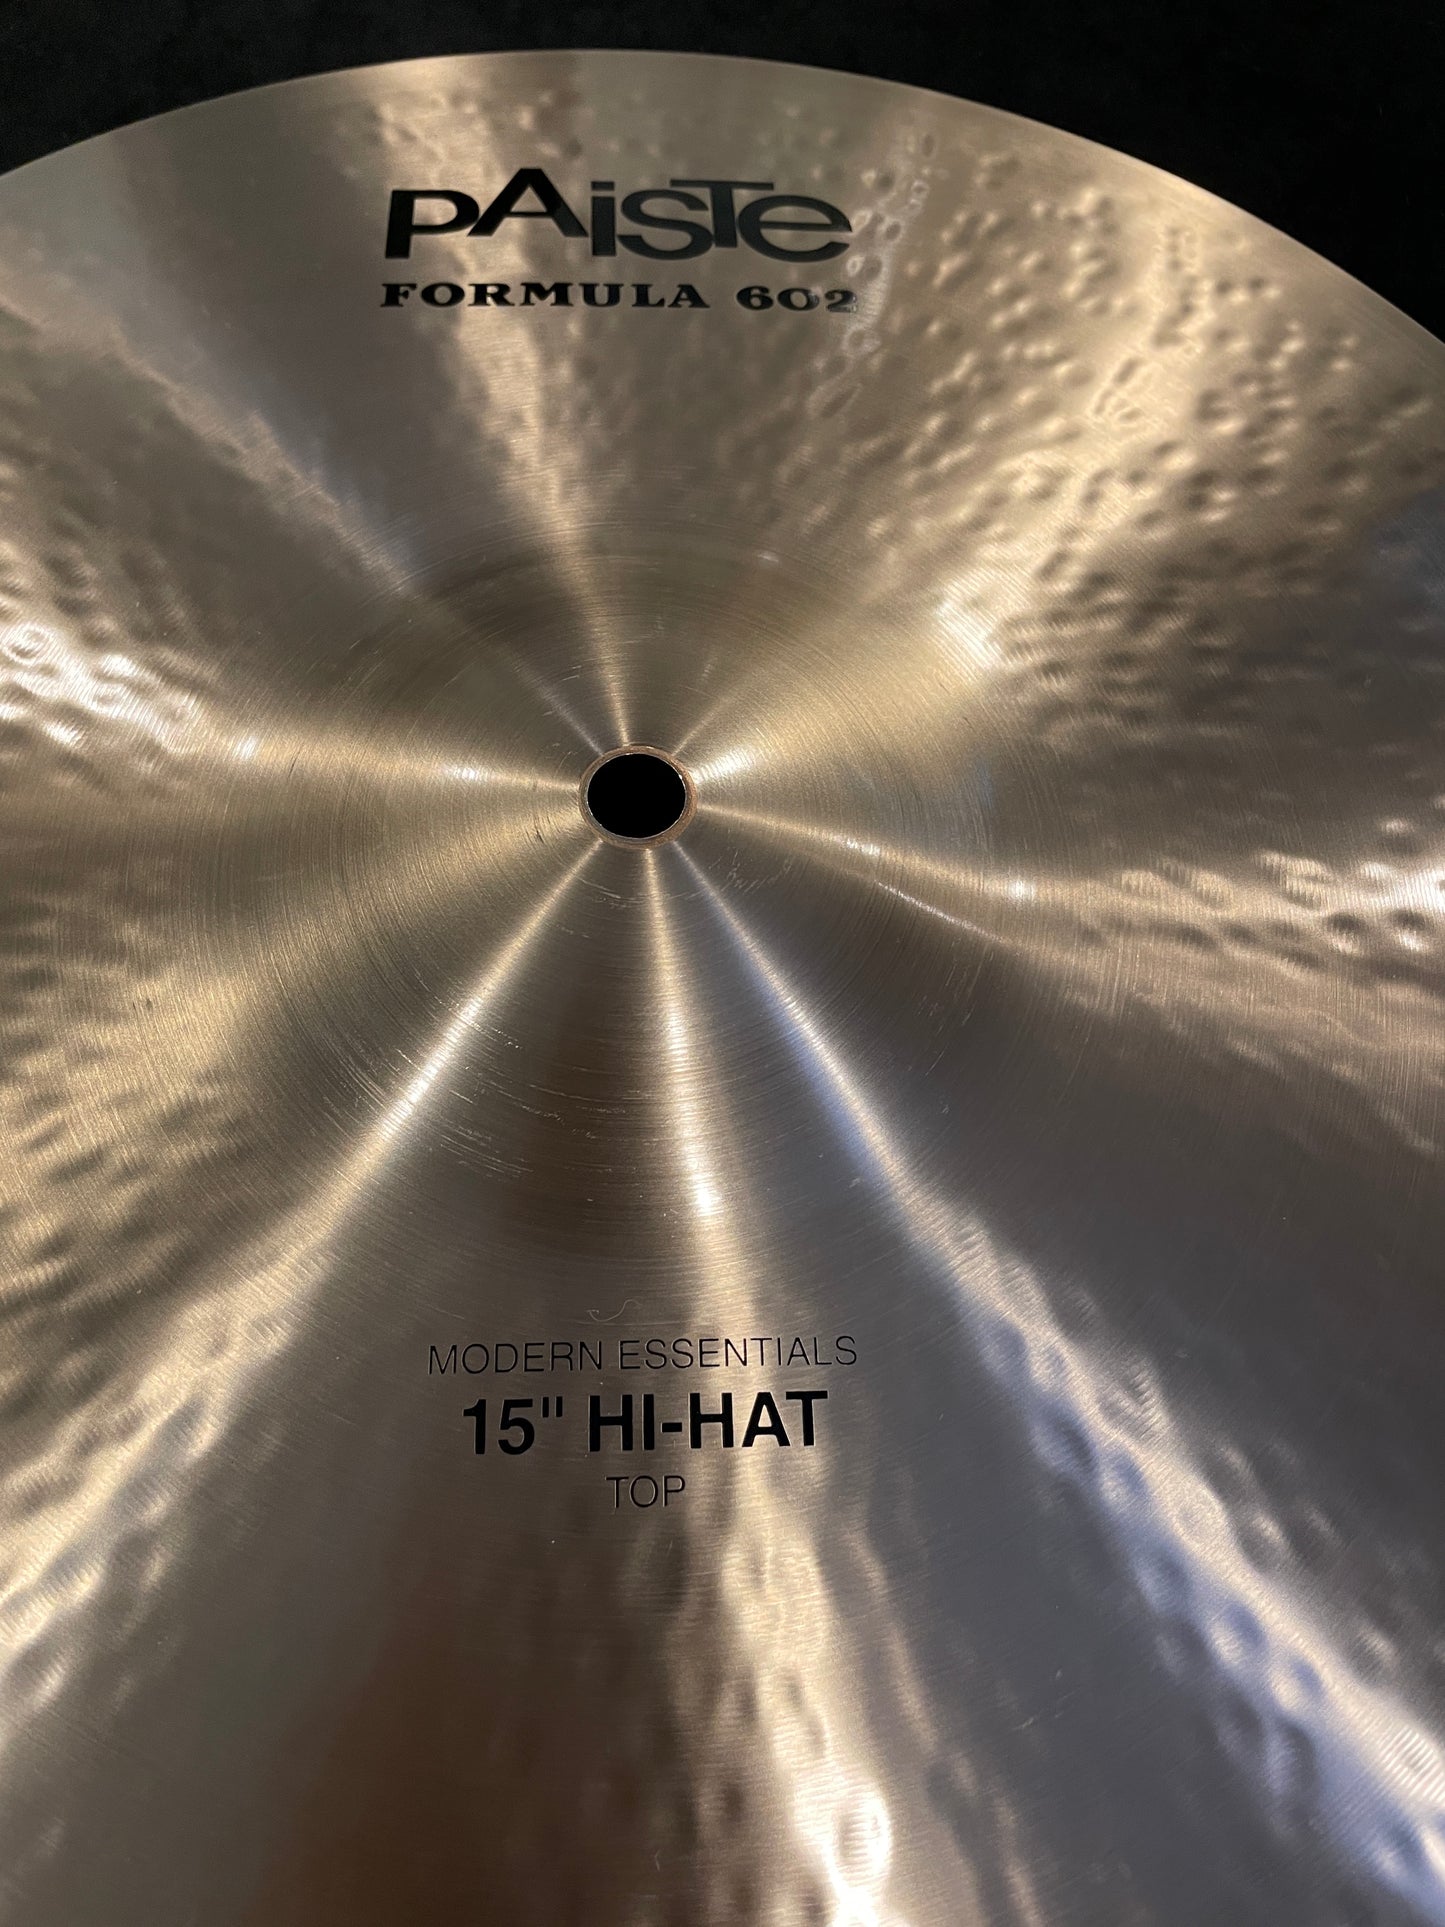 15" Paiste Formula 602 Modern Essentials Hi-Hat Cymbal Pair 1050g/1338g